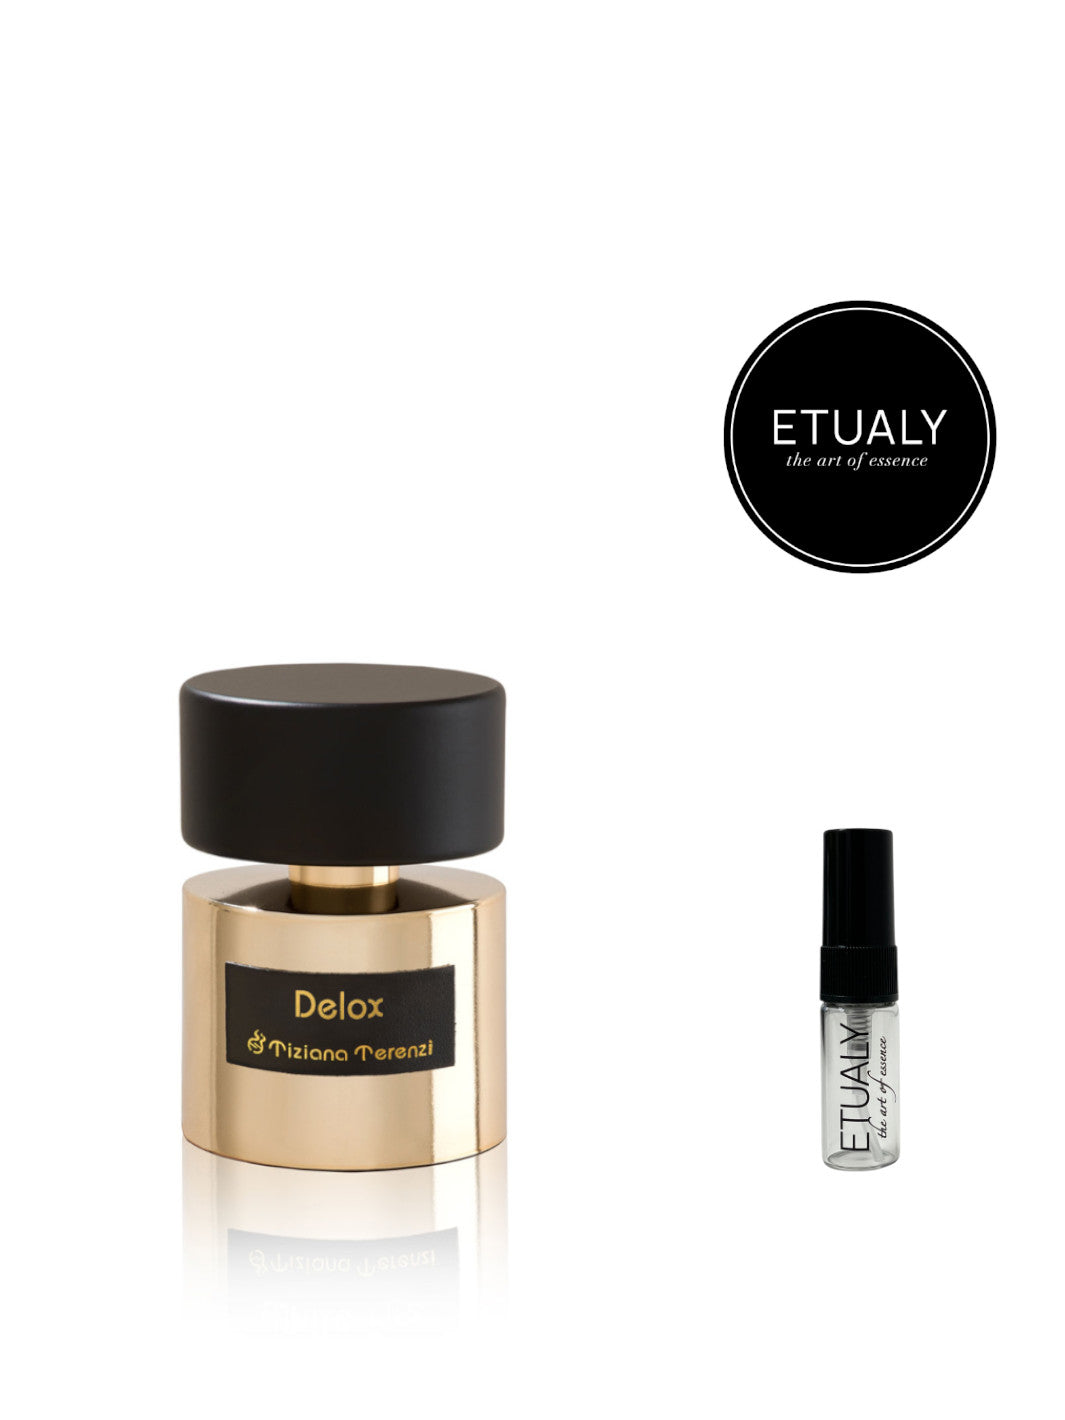 Extrait De Parfum Delox - sample